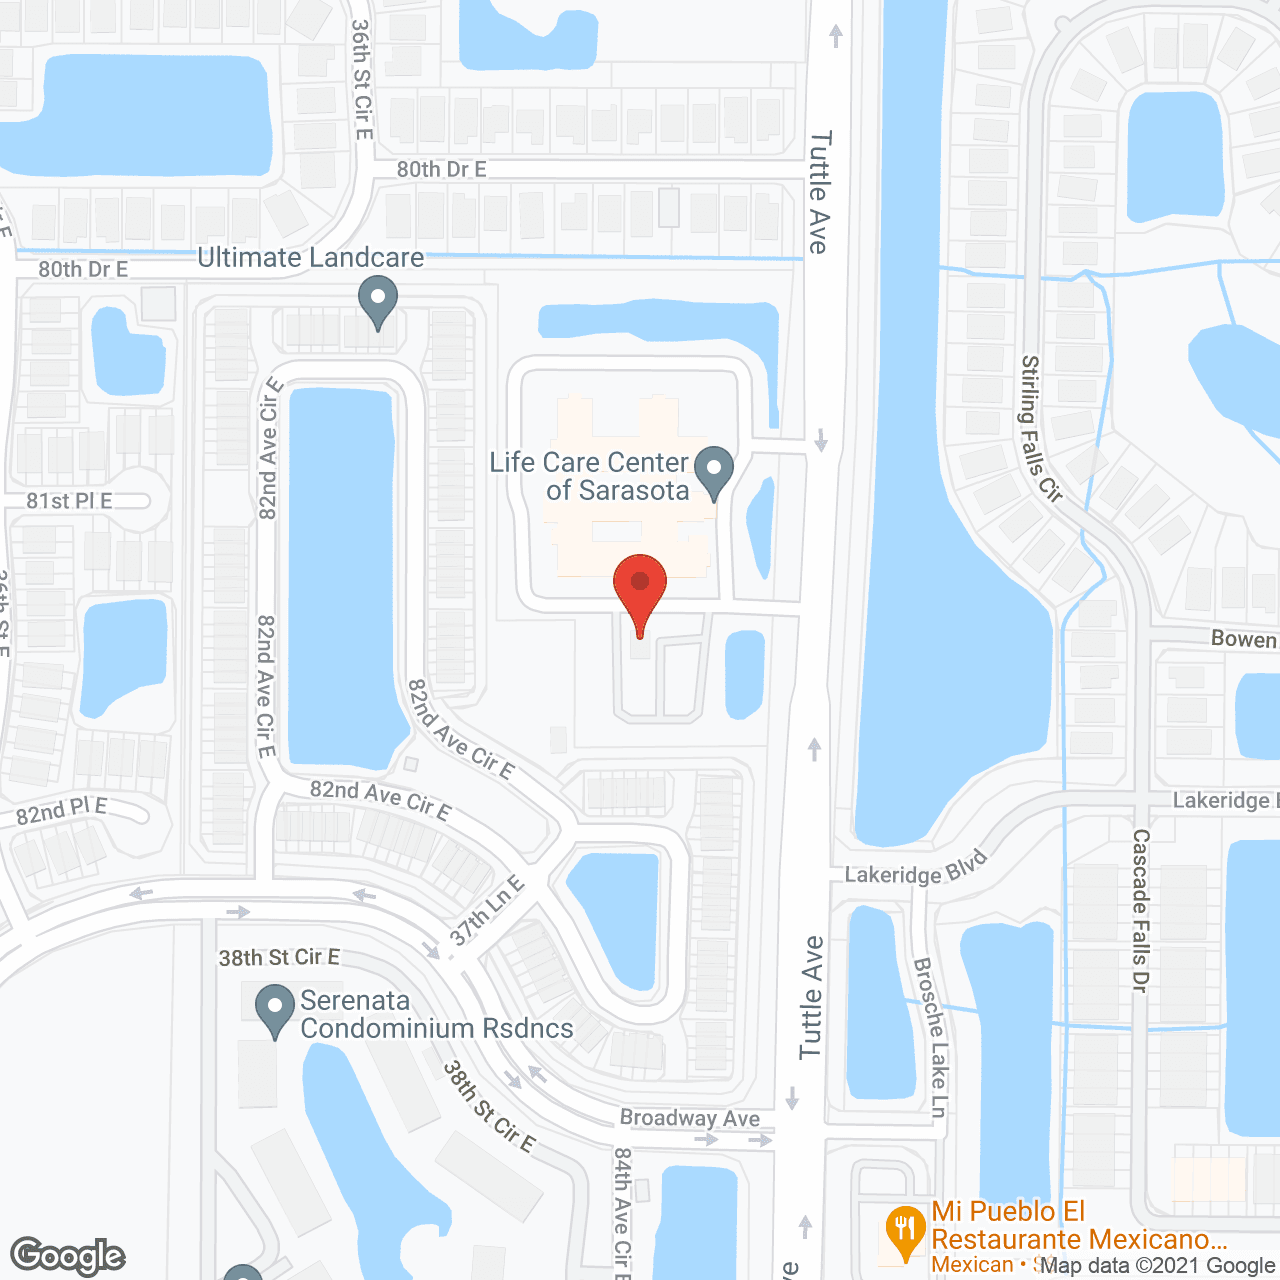 Life Care Center of Sarasota in google map